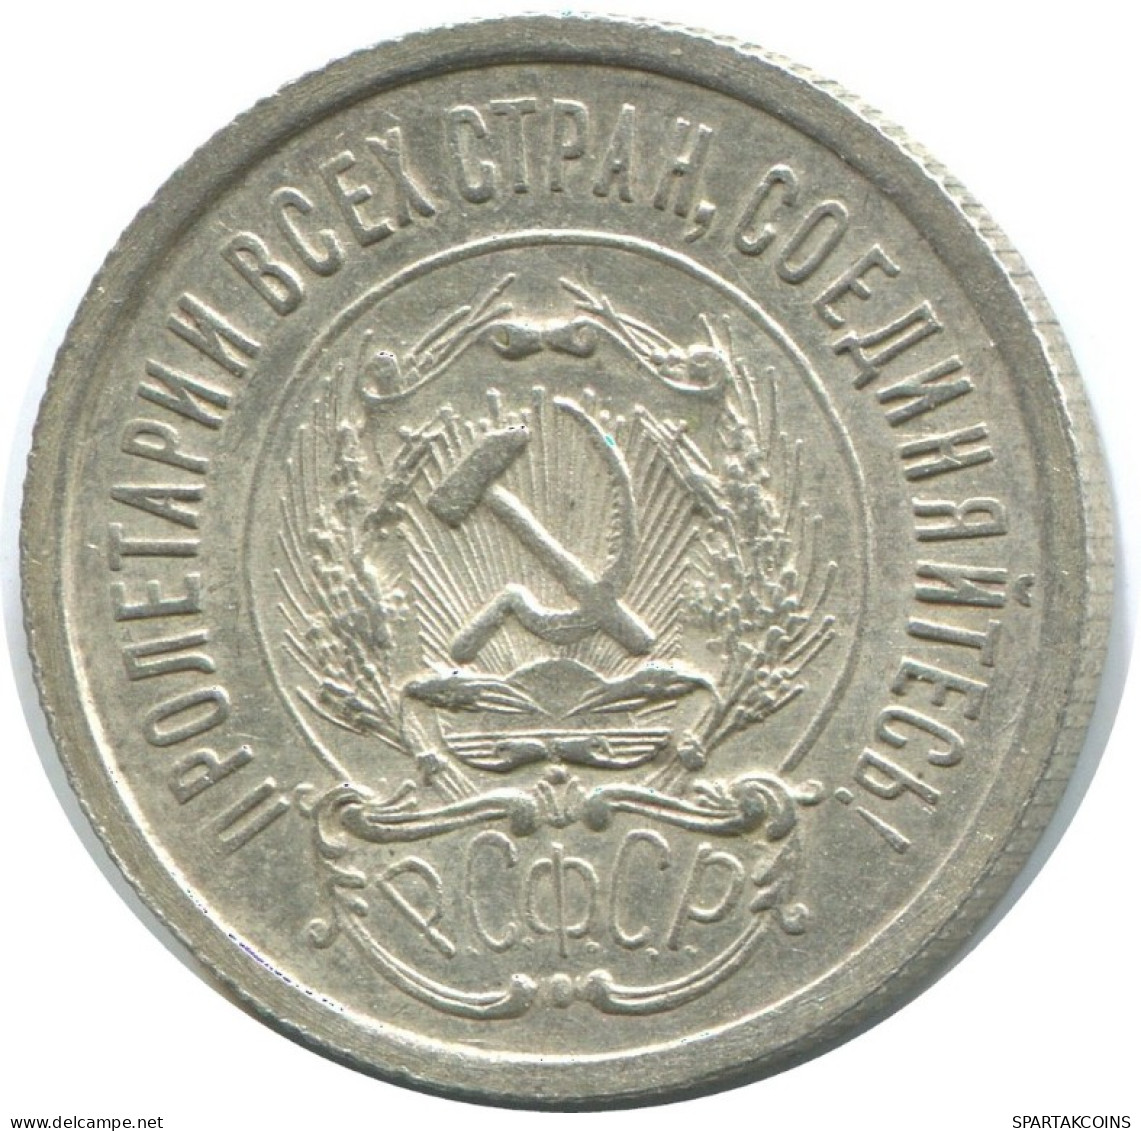 20 KOPEKS 1923 RUSSIA RSFSR SILVER Coin HIGH GRADE #AF654.U.A - Rusia